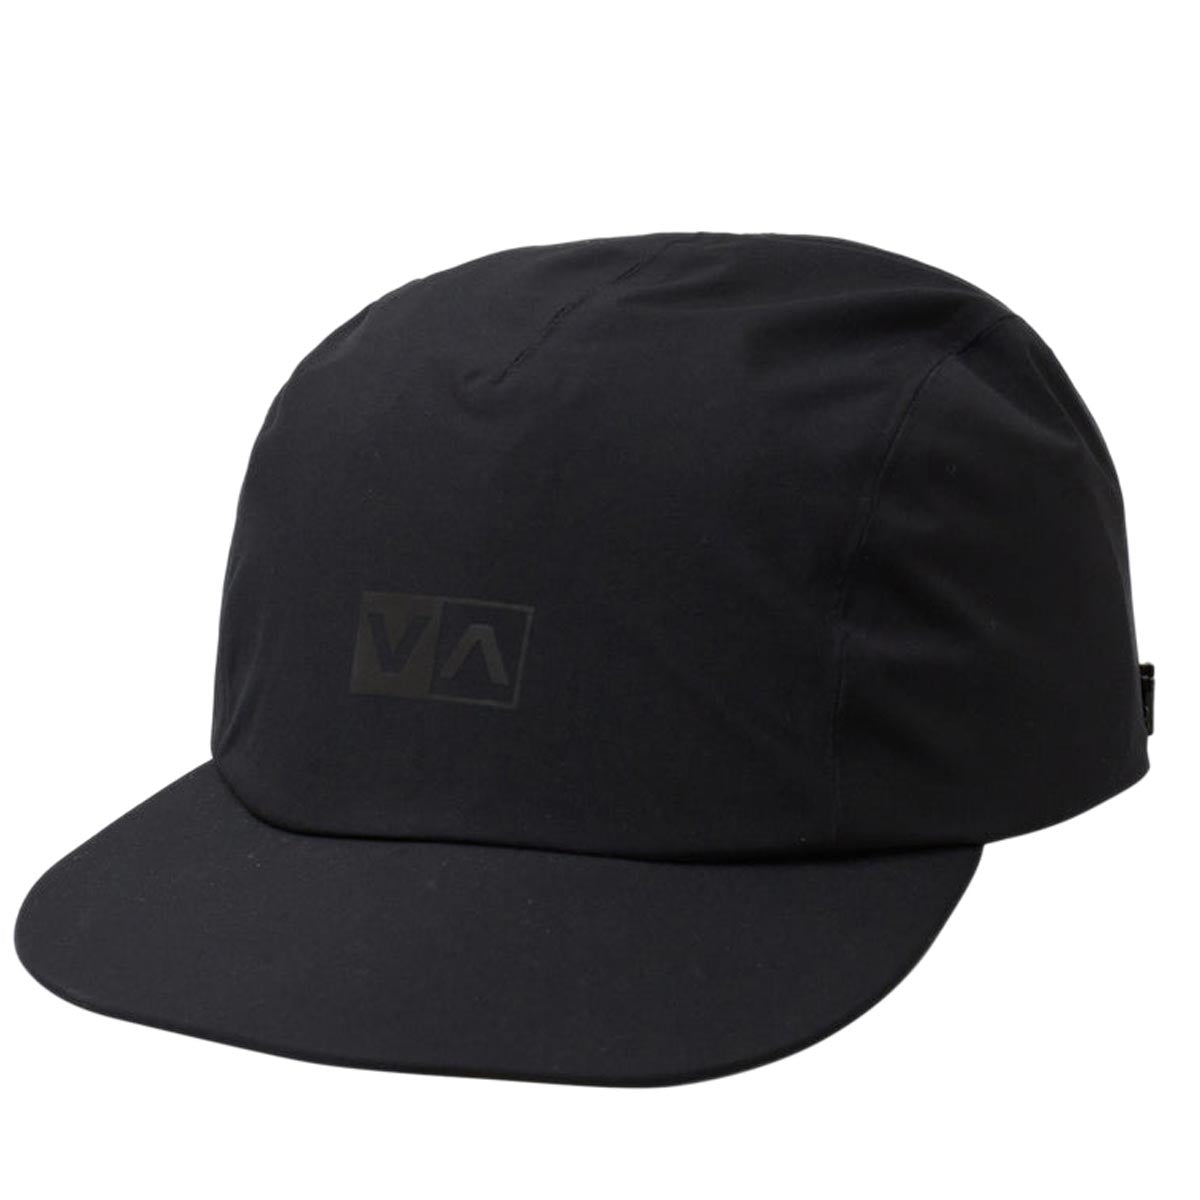 RVCA Runner Hat - Black image 1